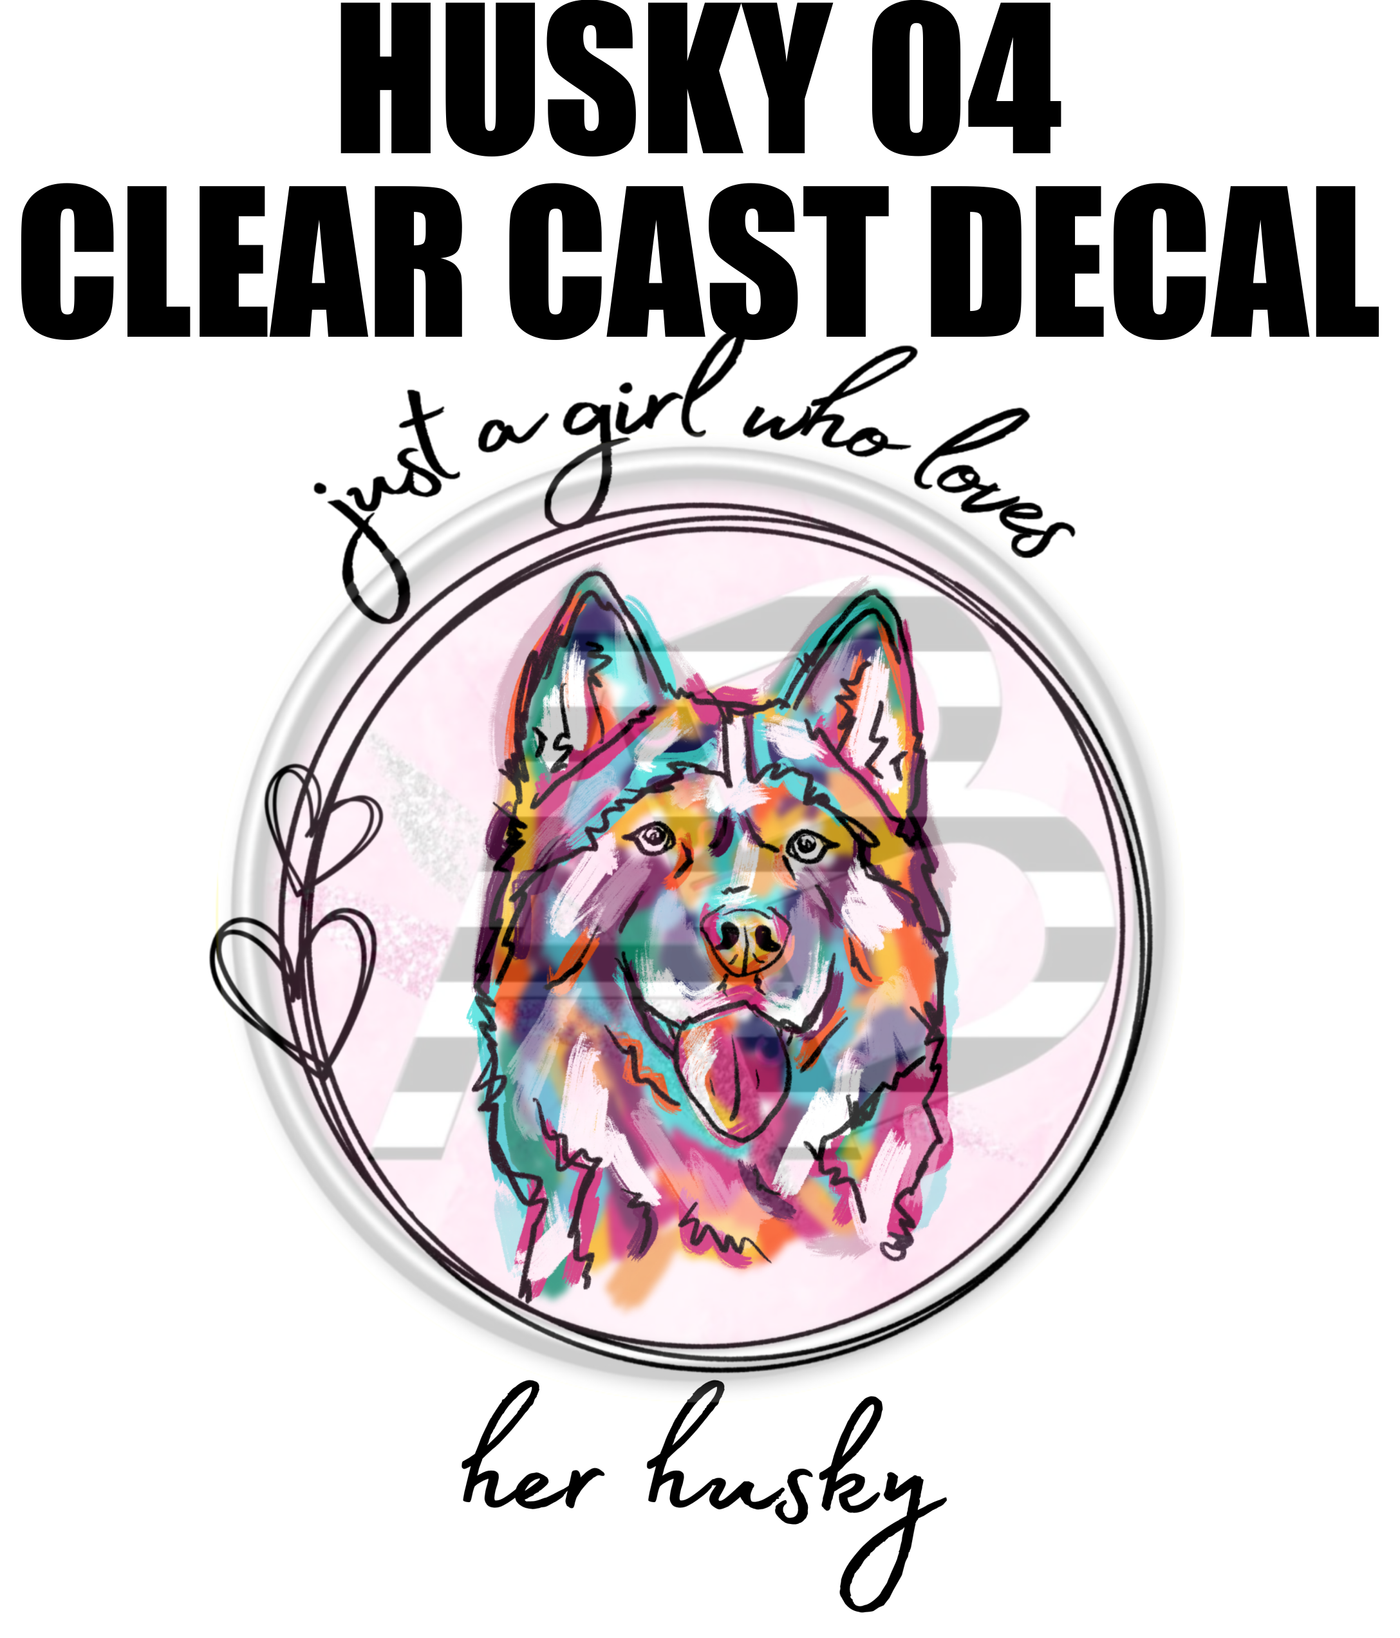 Husky 04 - Clear Cast Decal